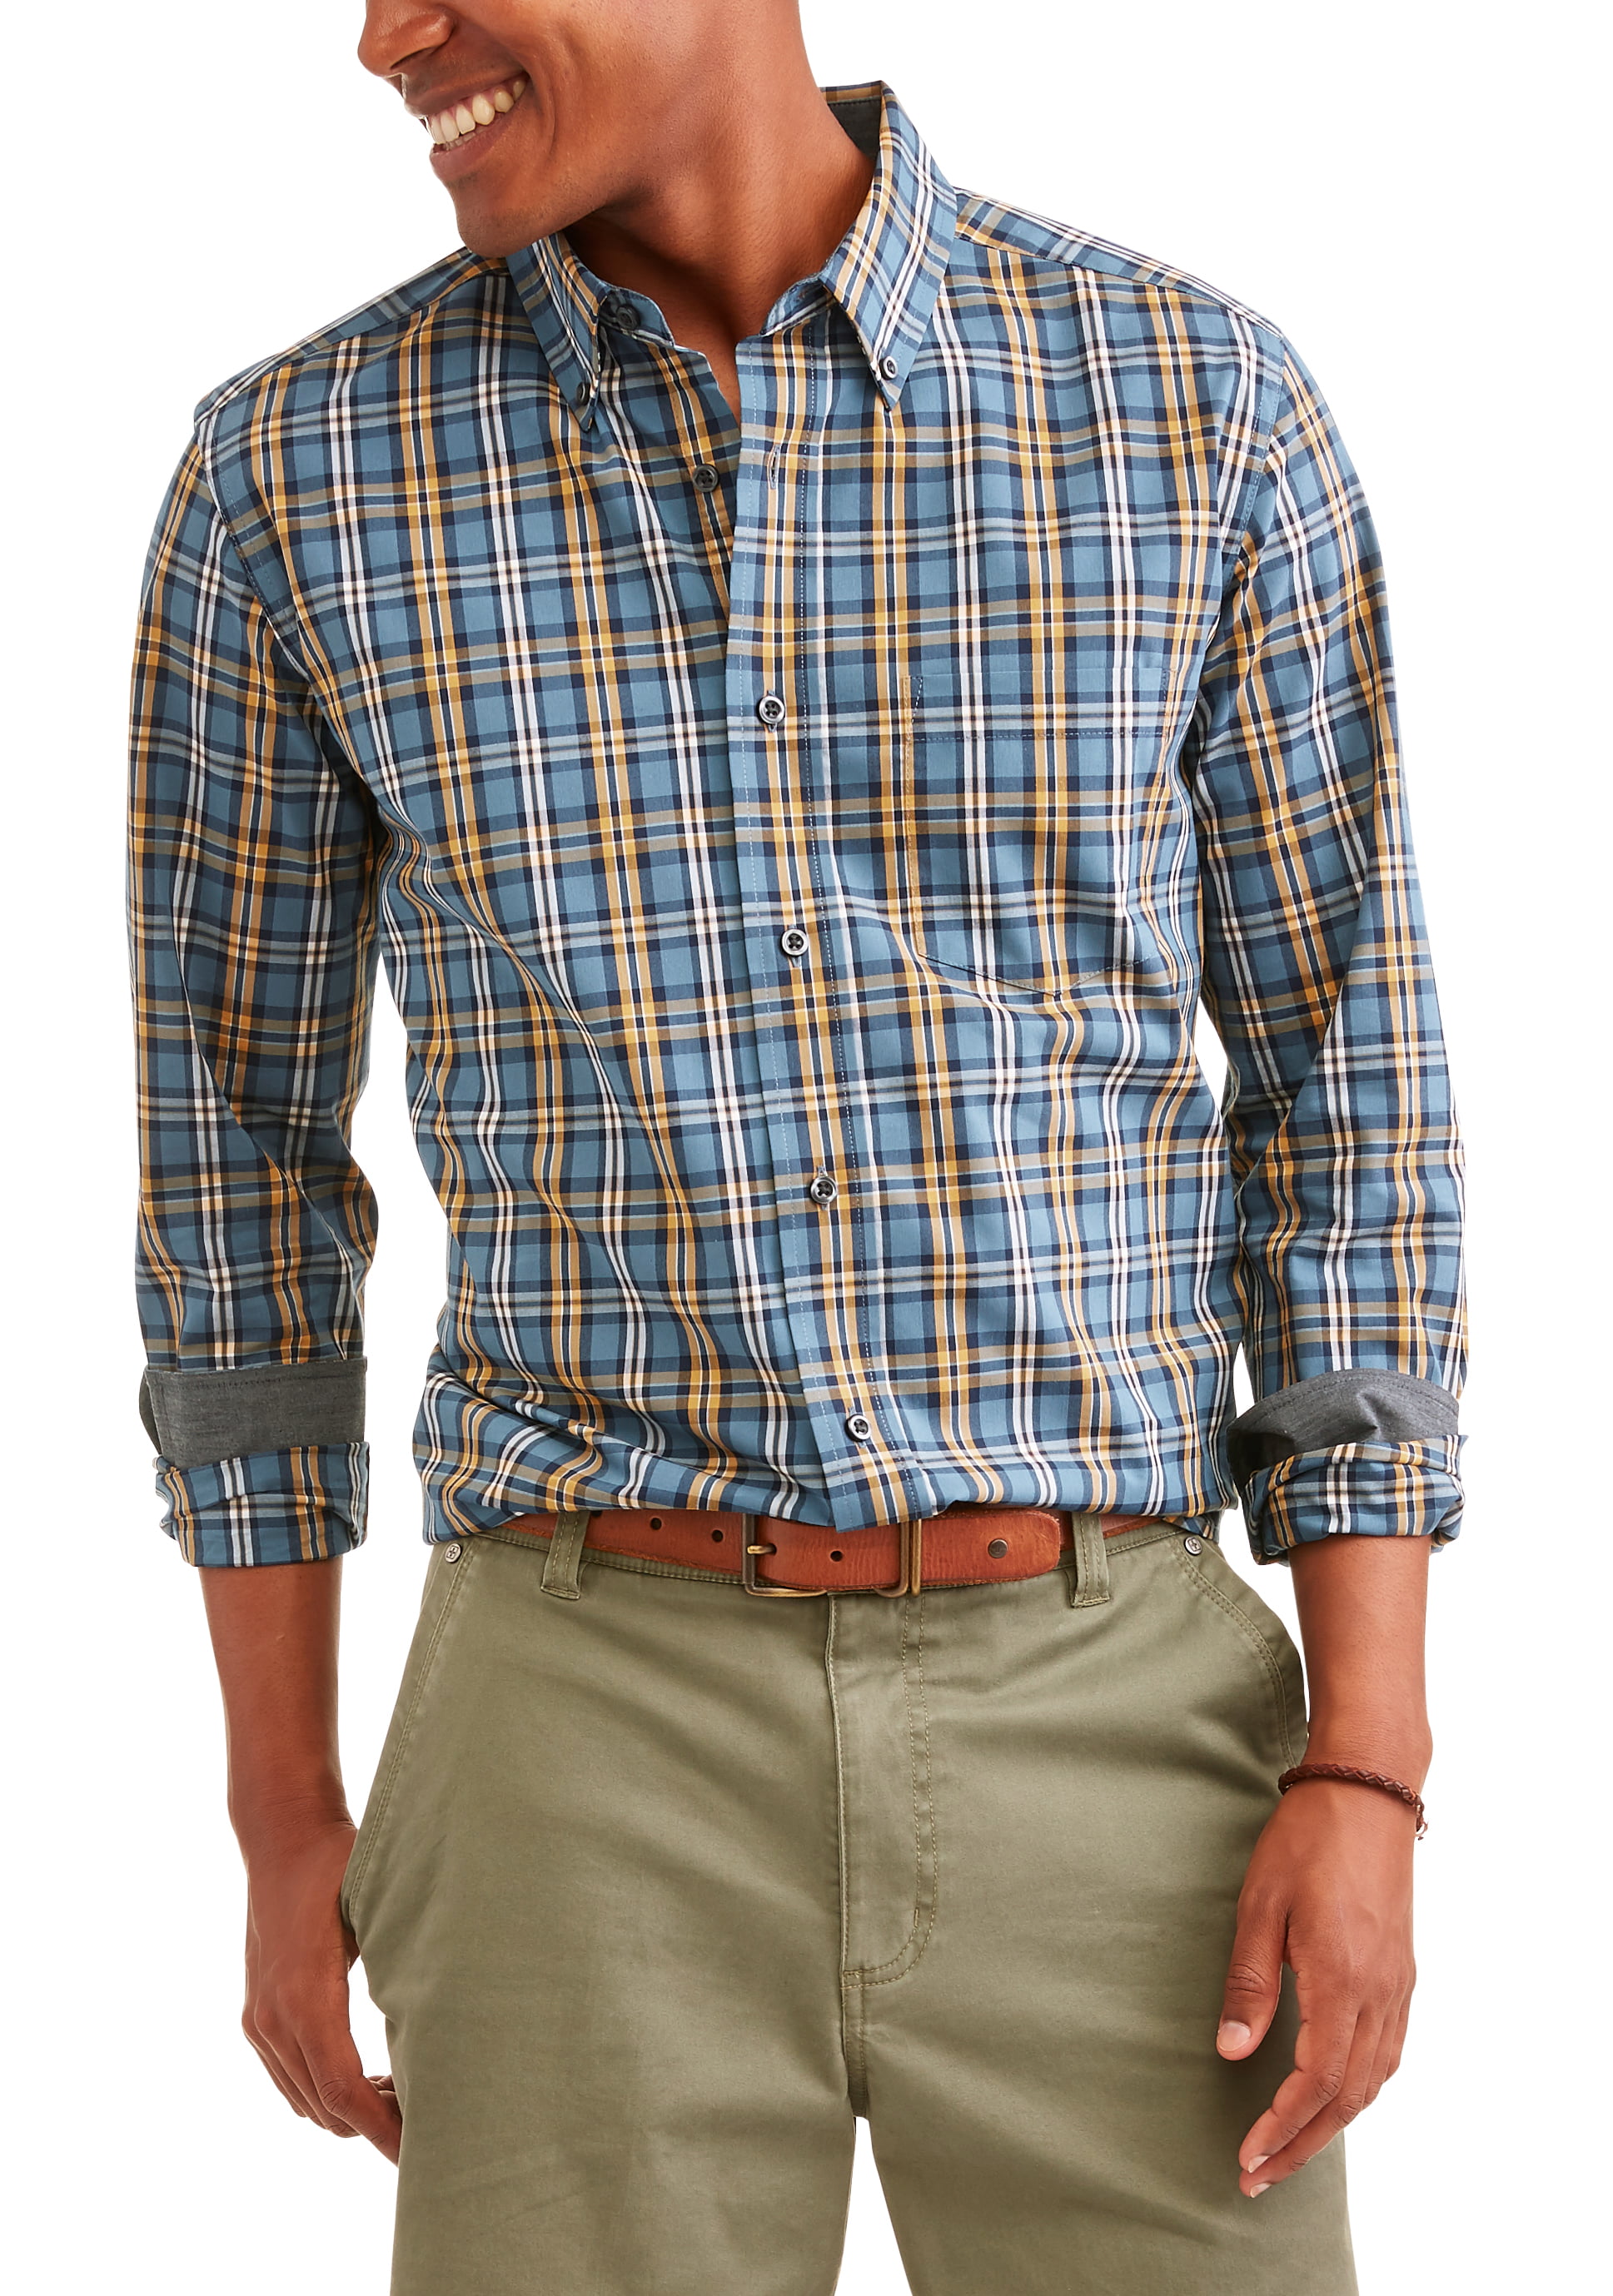 George Men's Long Sleeve Stretch Poplin Shirt, Up to Size 5XL 